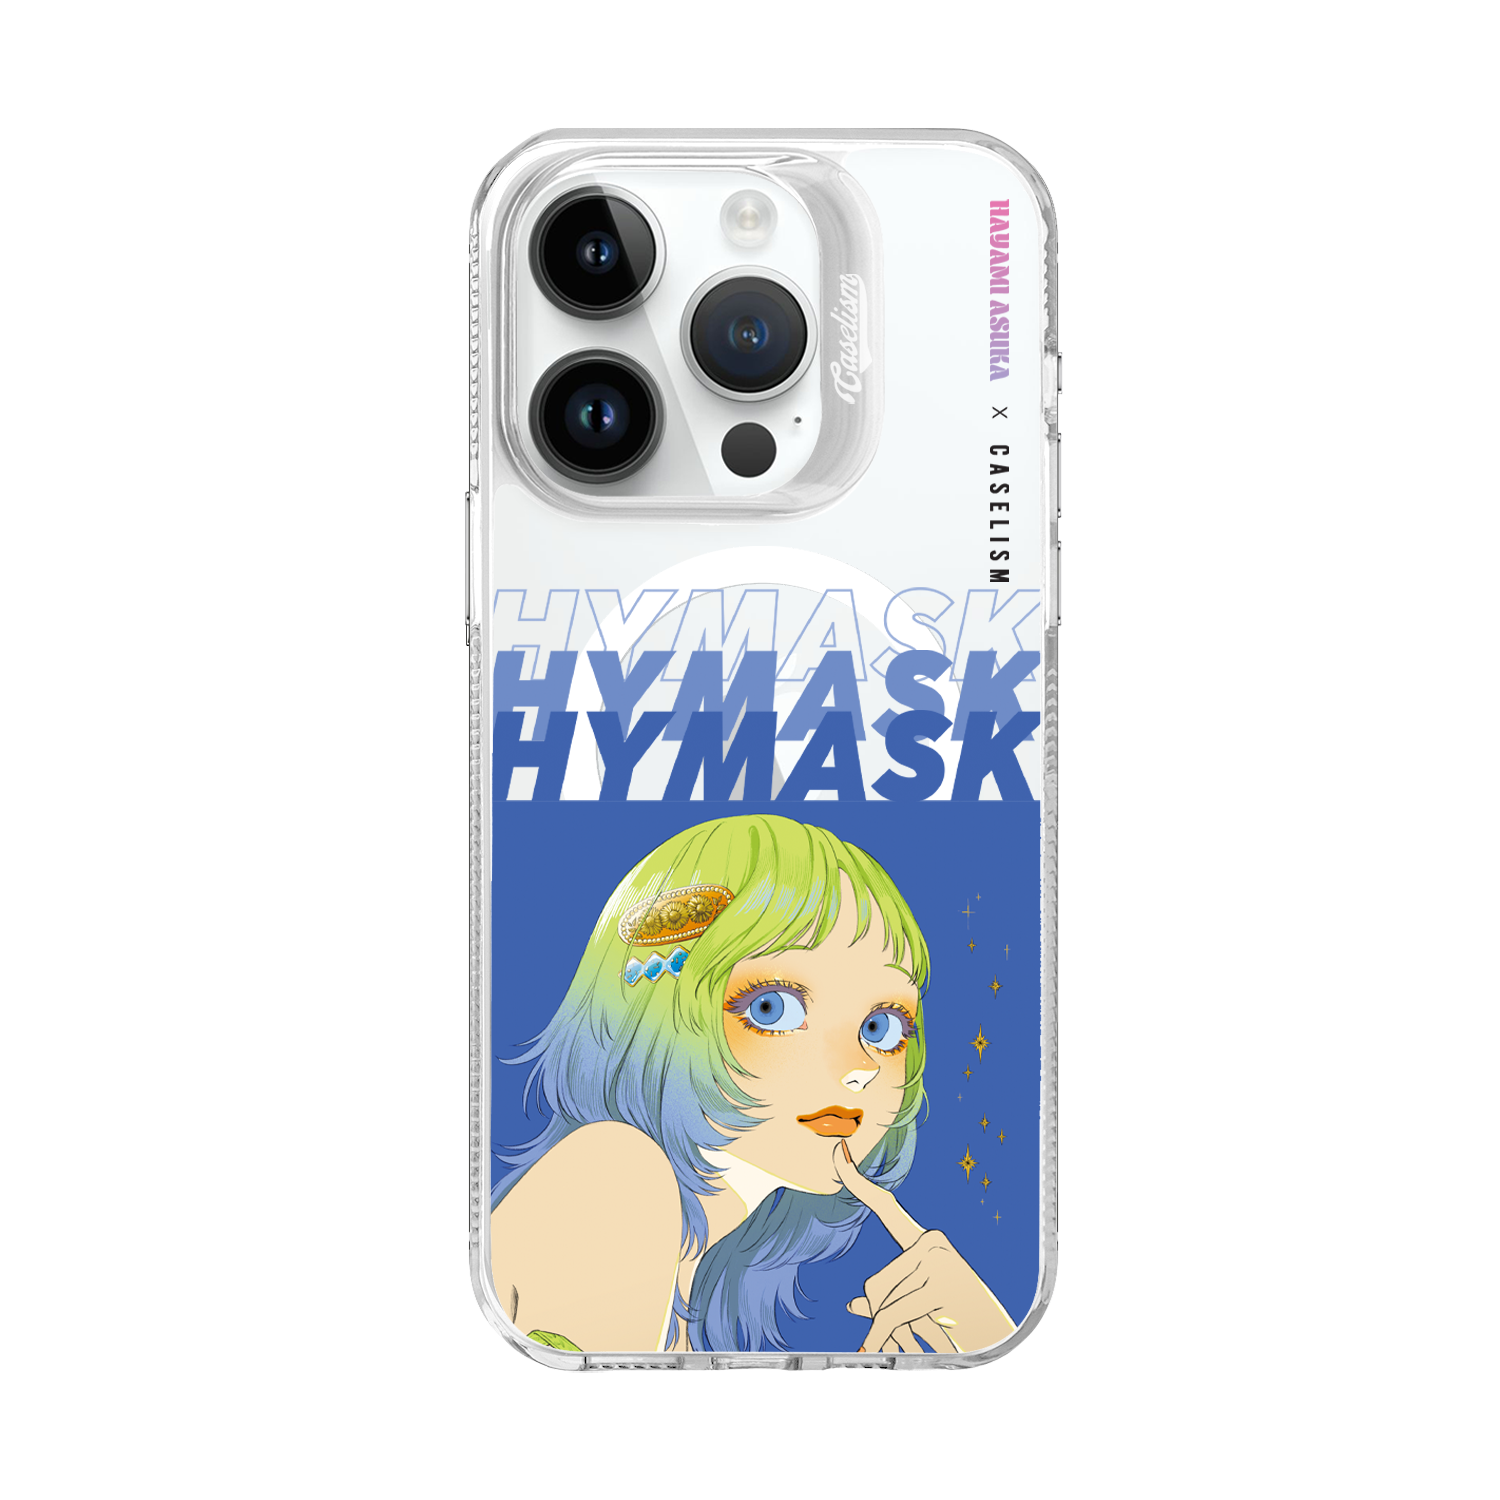 HAYA002 - ColorLite Case for iPhone